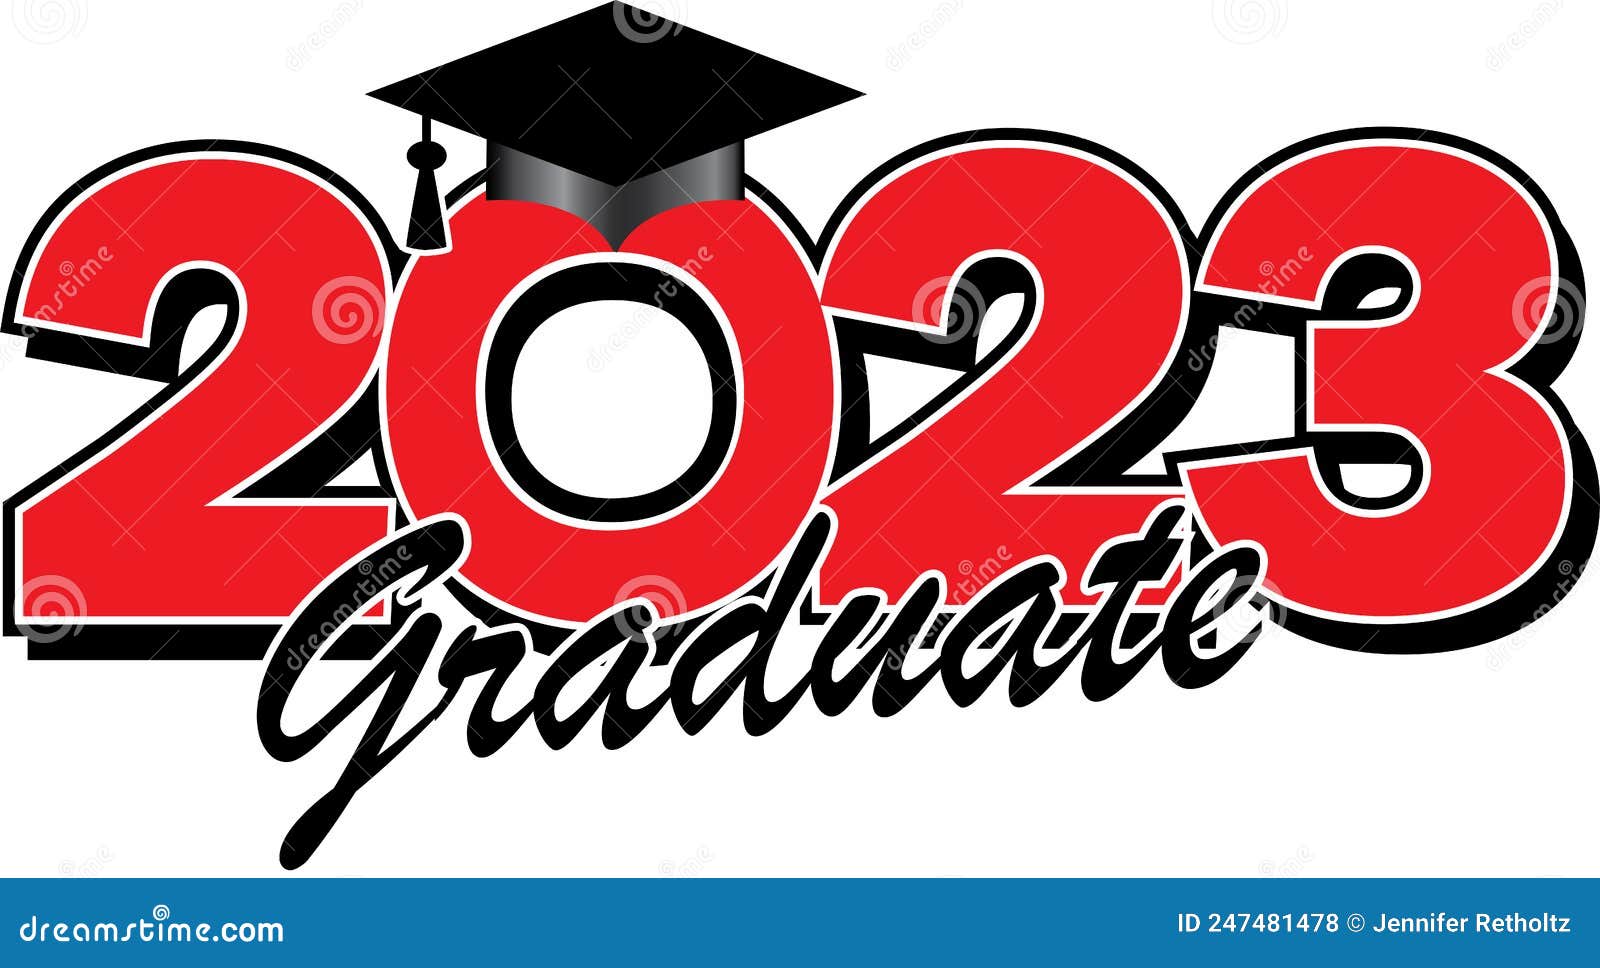 2023 Graduate Red And Black Stock Illustration Illustration Of Design